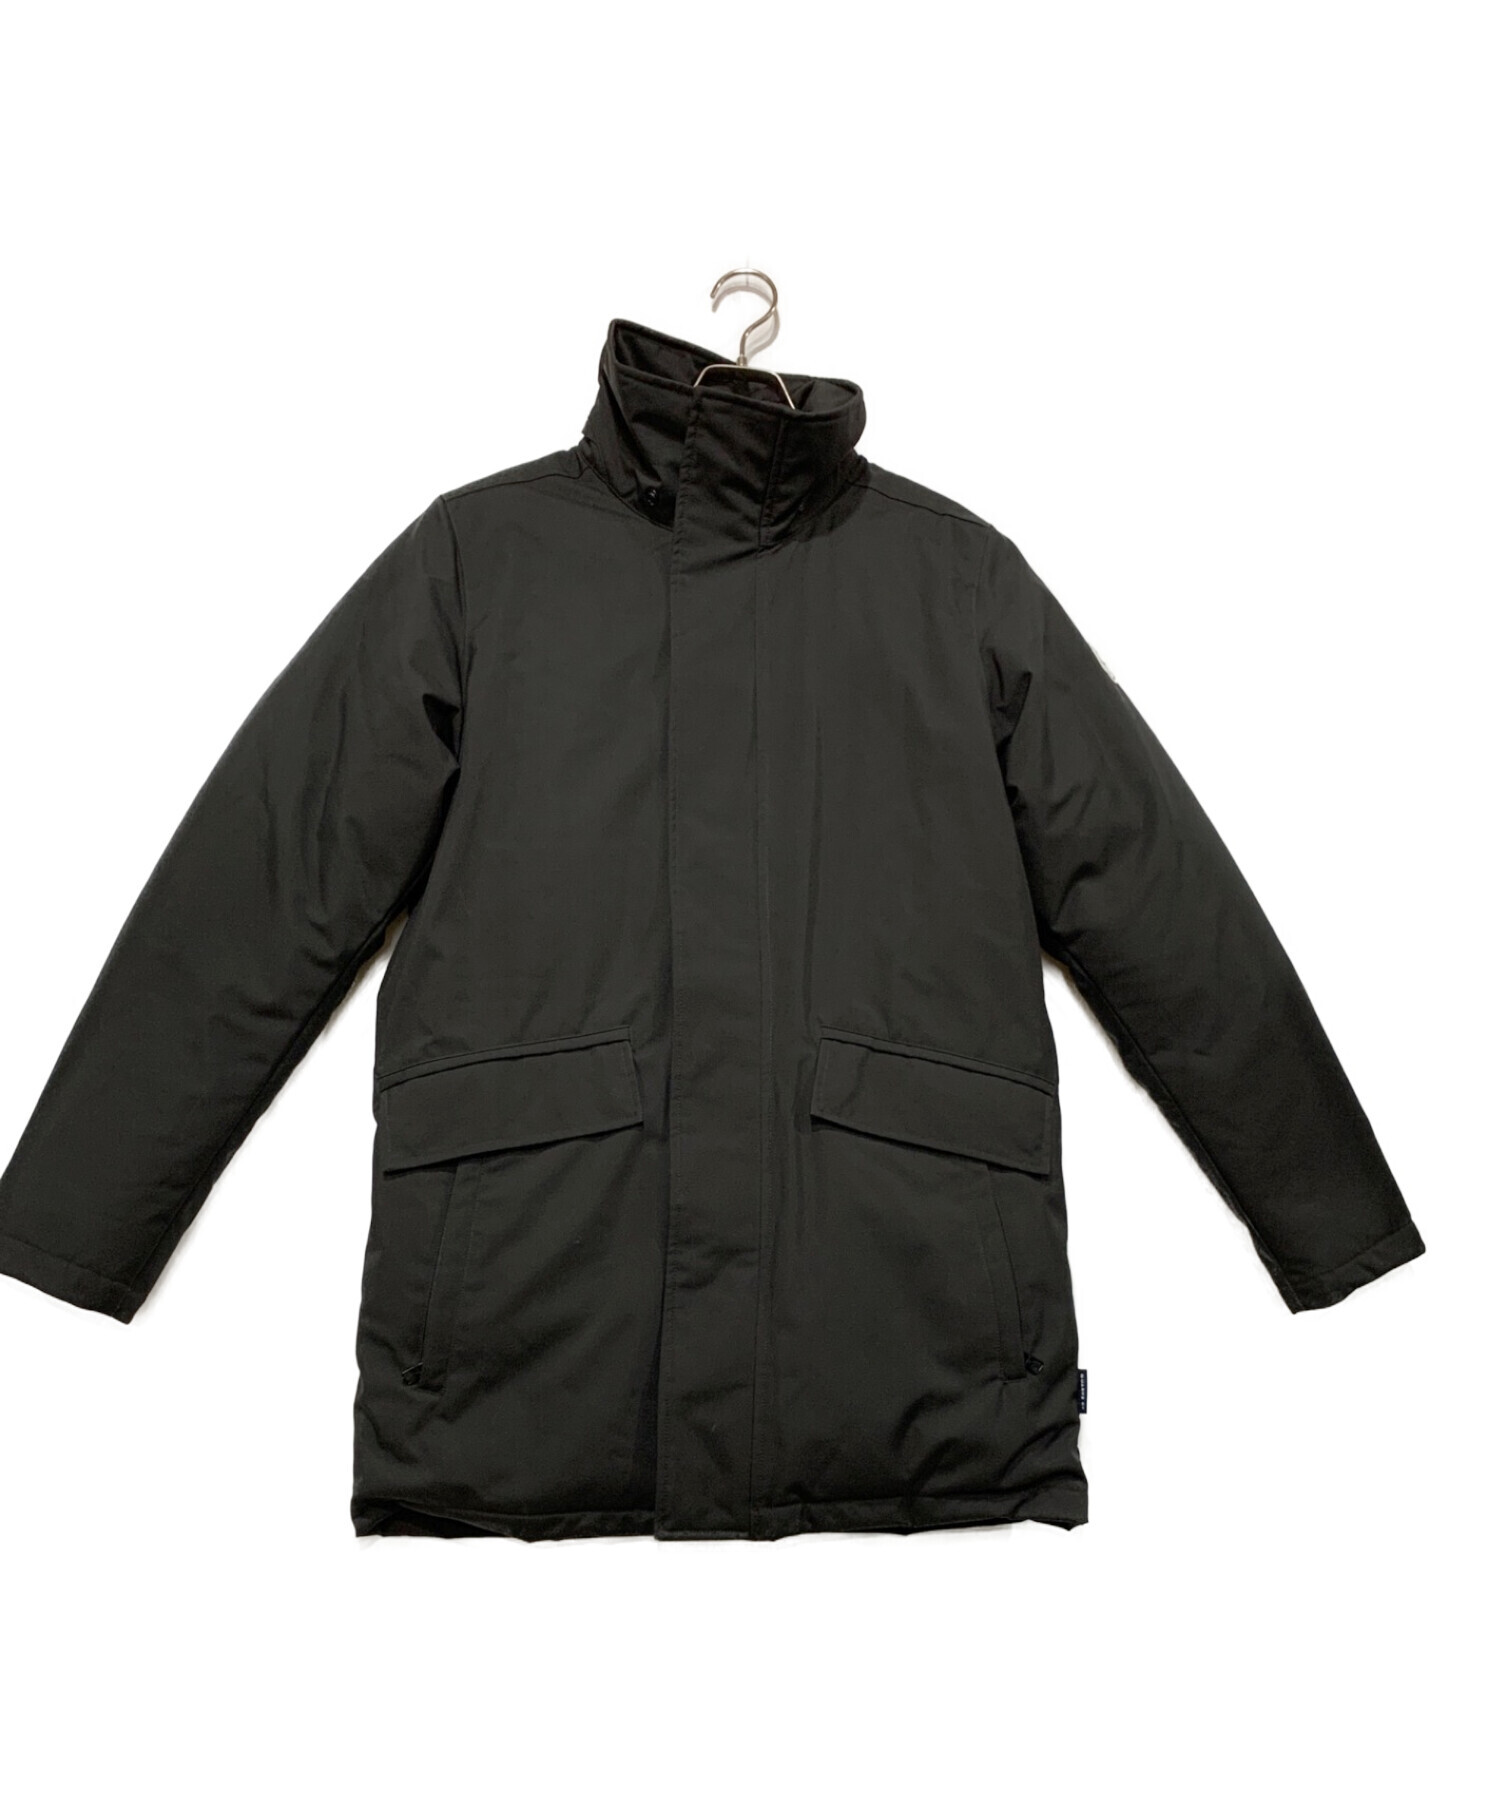 Quartz Co (クオーツコー) ダウンジャケット ブラック サイズ:Sサイズ